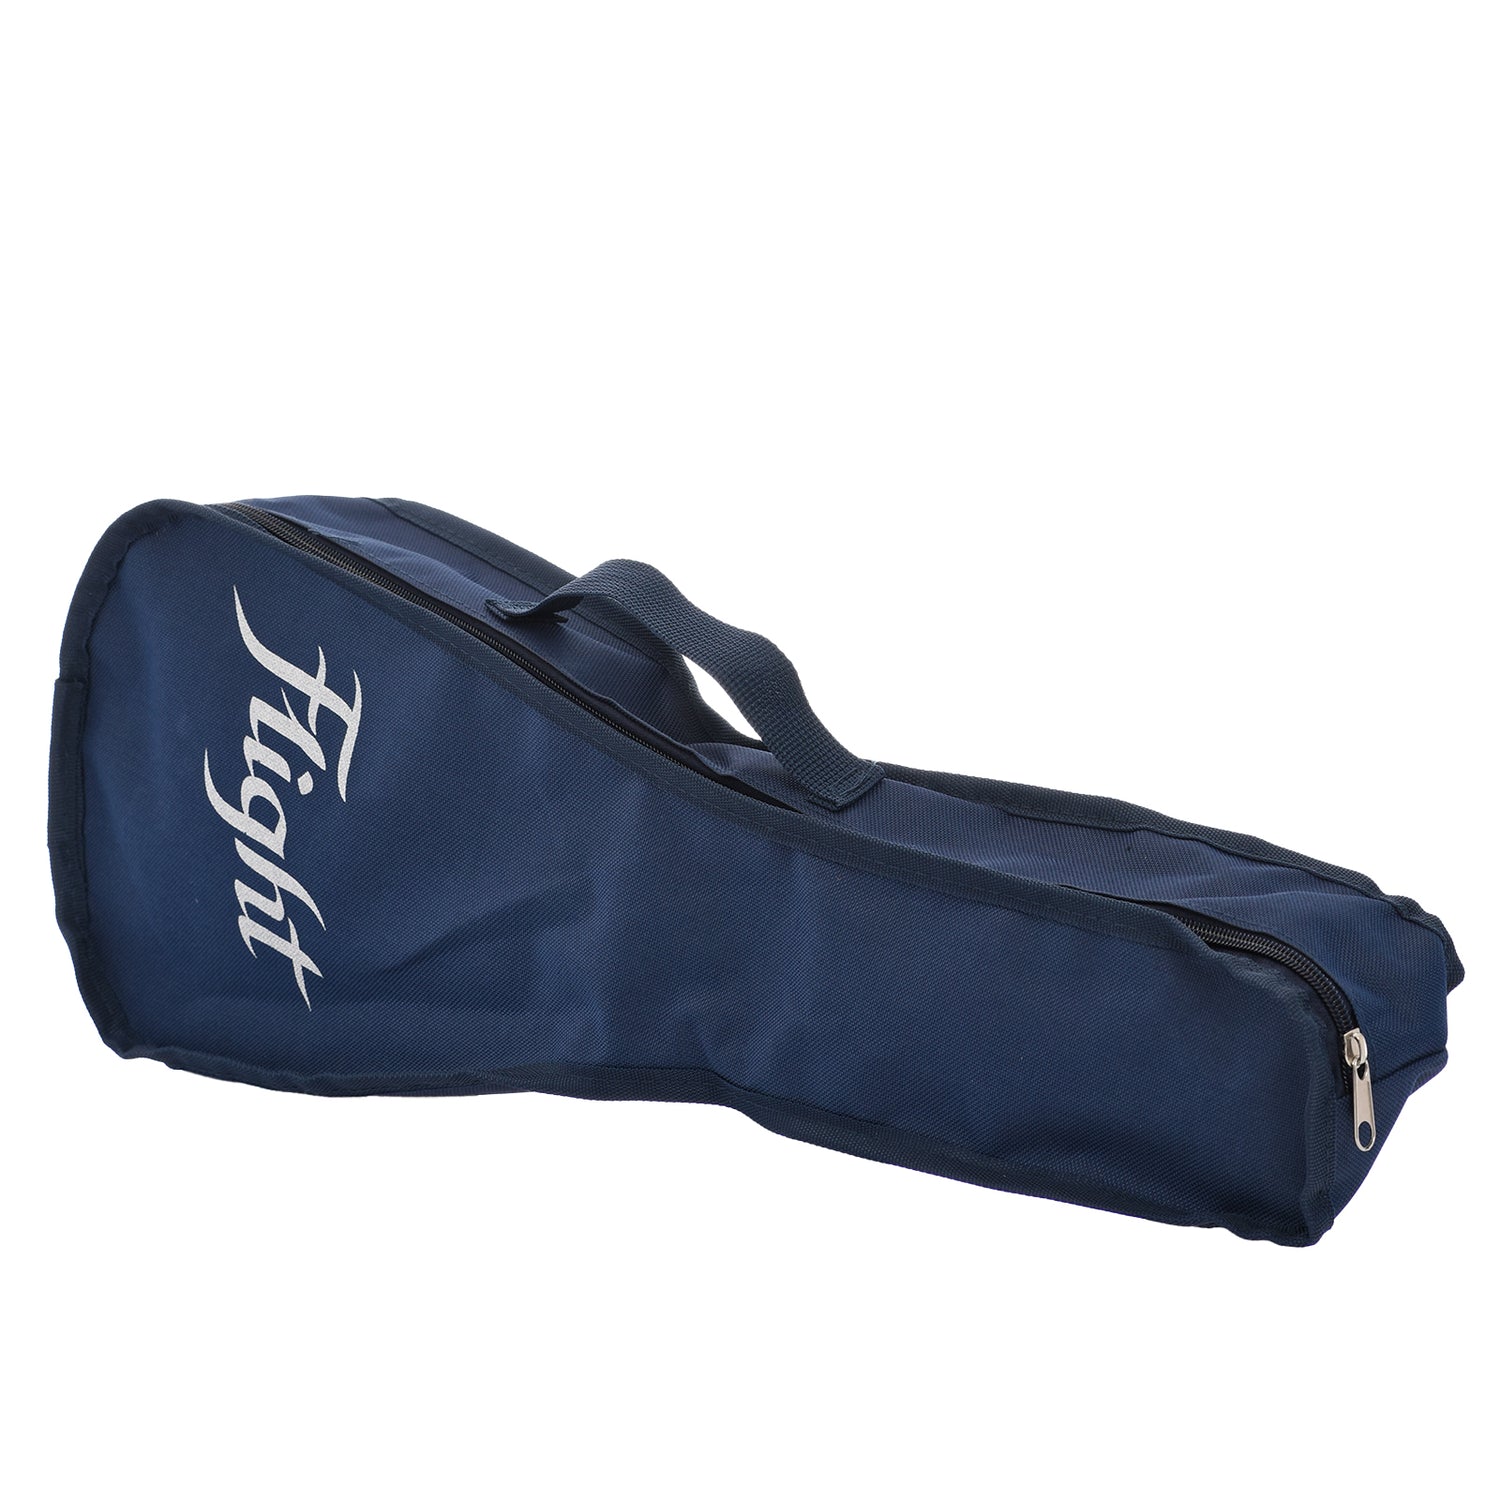 Gig bag for Flight Travel Series TUS65 Ruby Soprano Uke